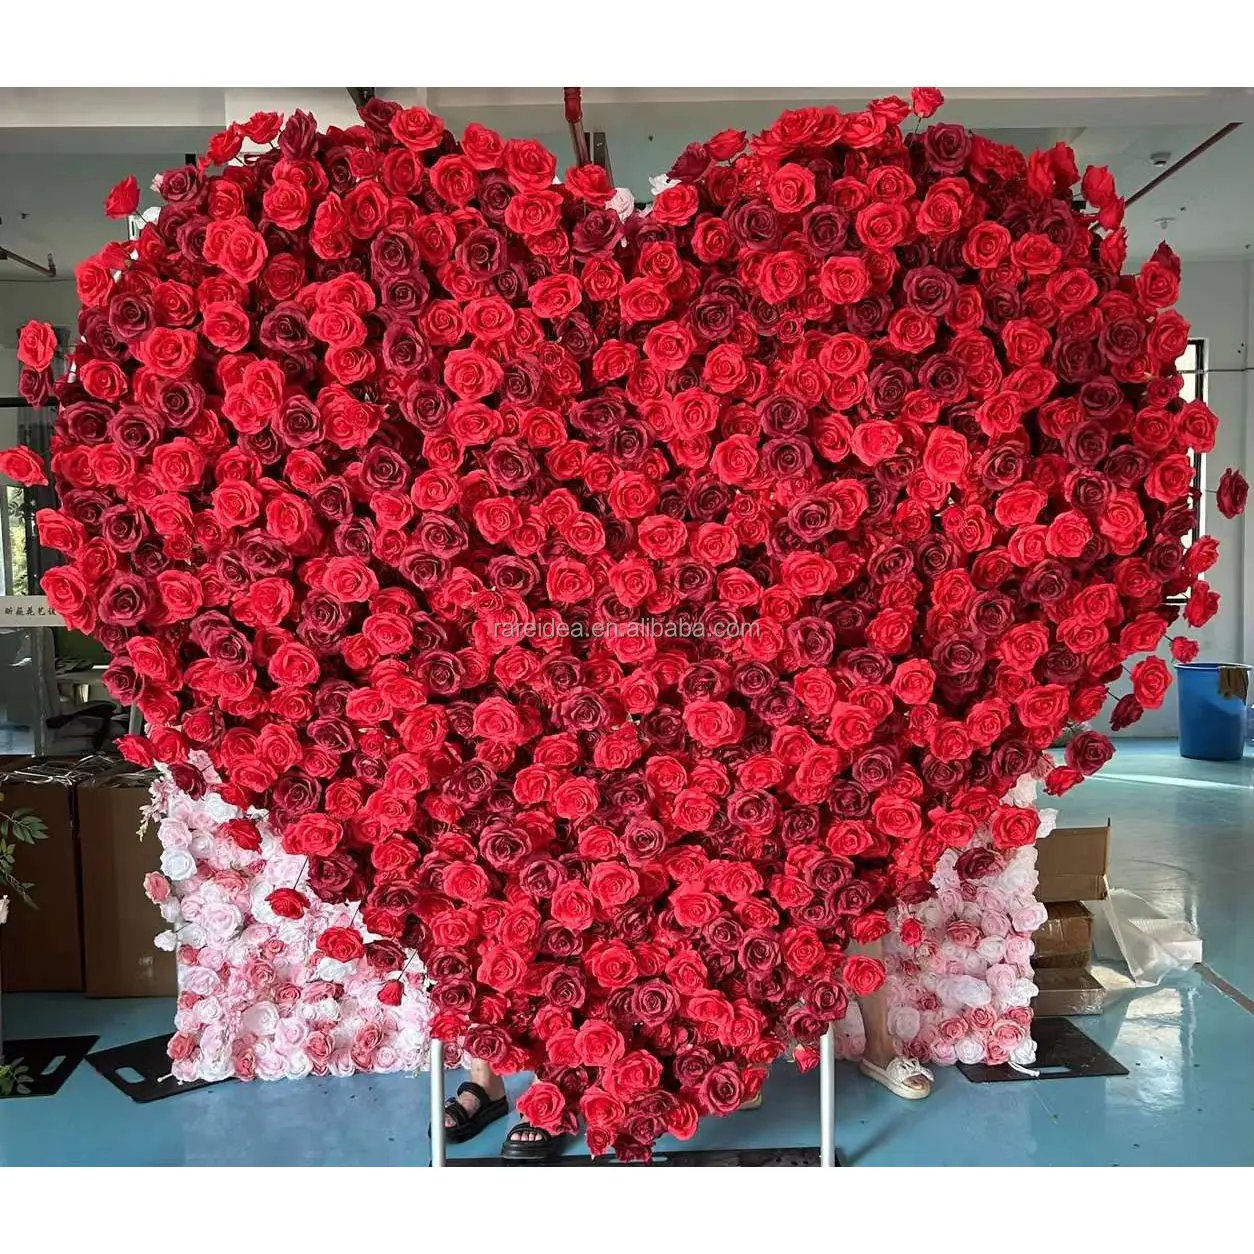 Latar belakang bunga mawar merah sutra menggulung bentuk hati latar belakang dinding bunga buatan untuk dekorasi panggung acara pernikahan